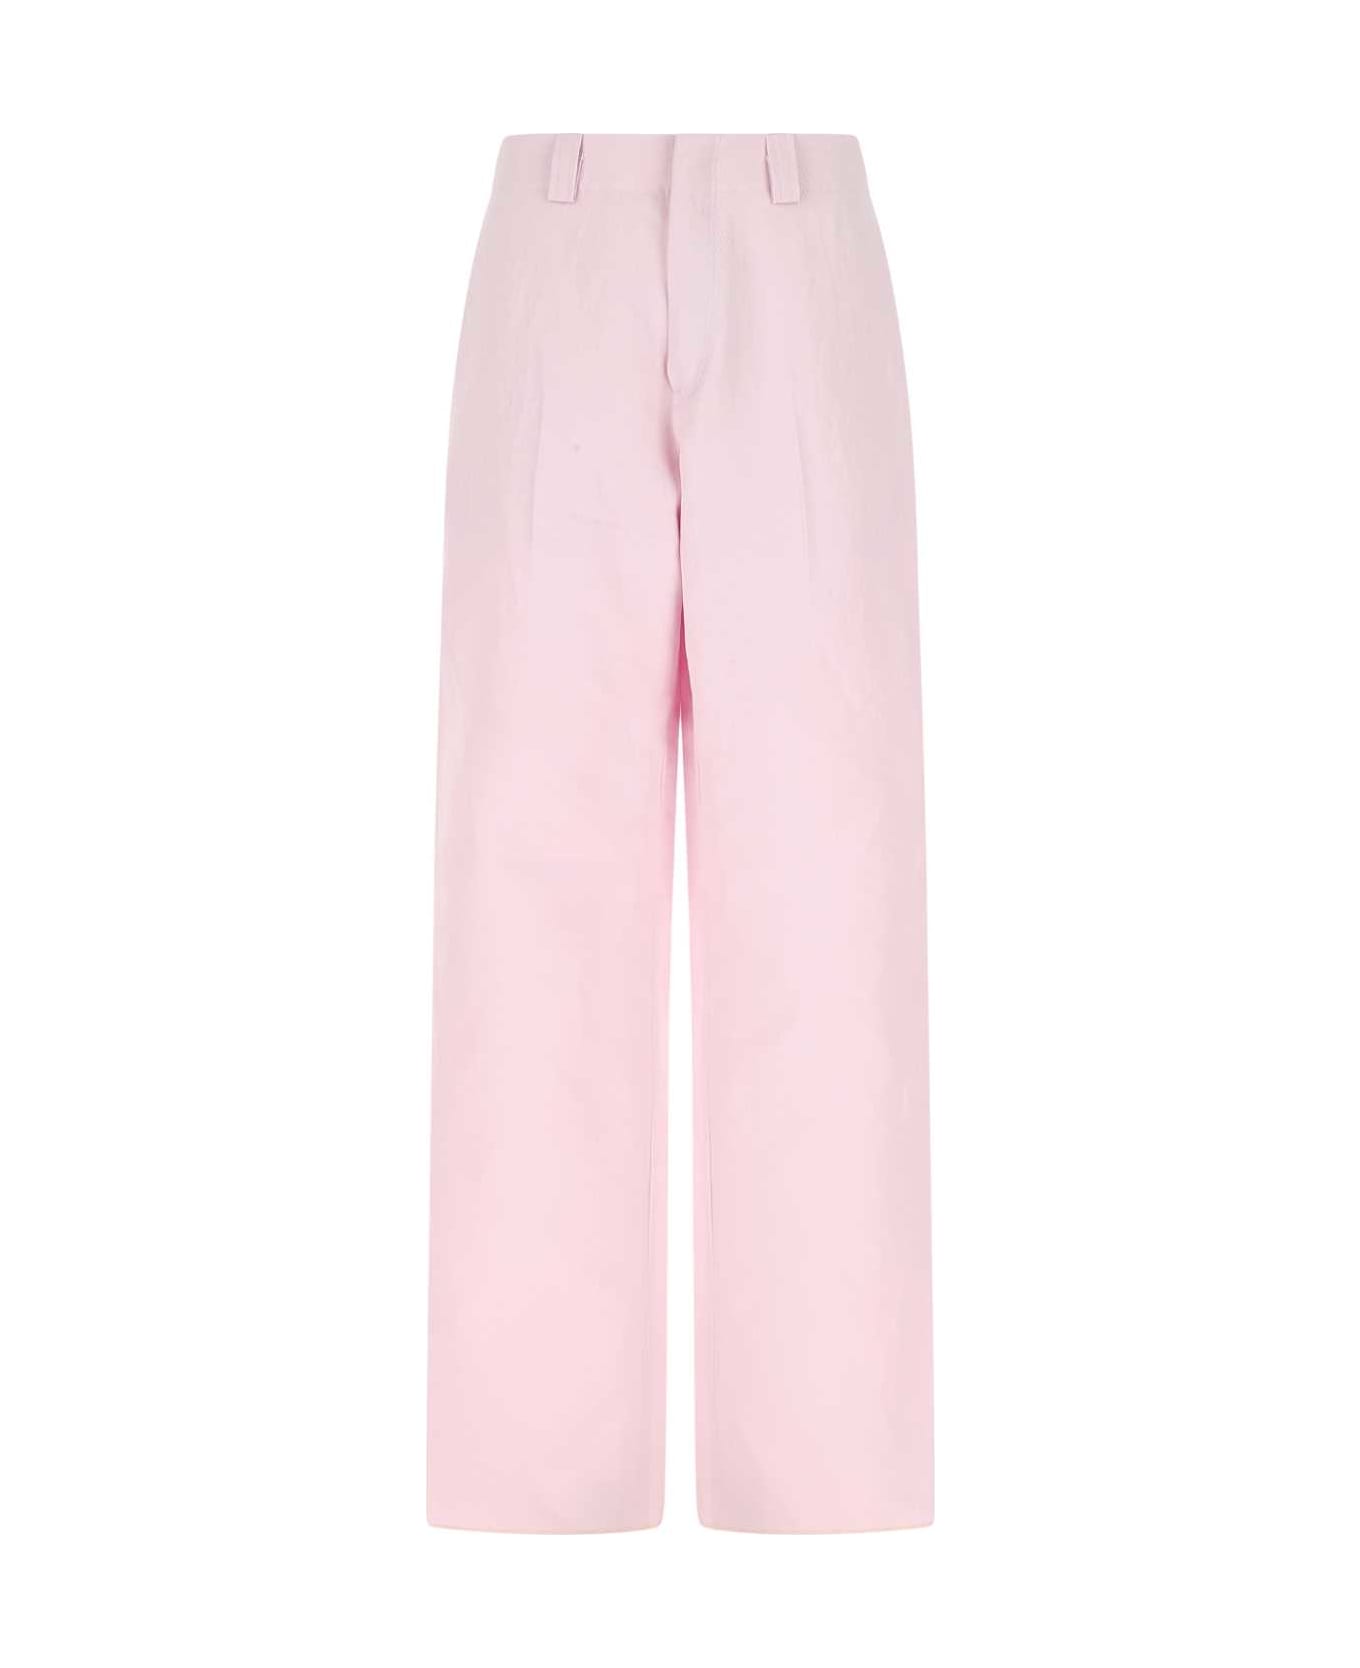 Zegna Pastel Pink Cotton Blend Wide-leg Pant - PINK ボトムス